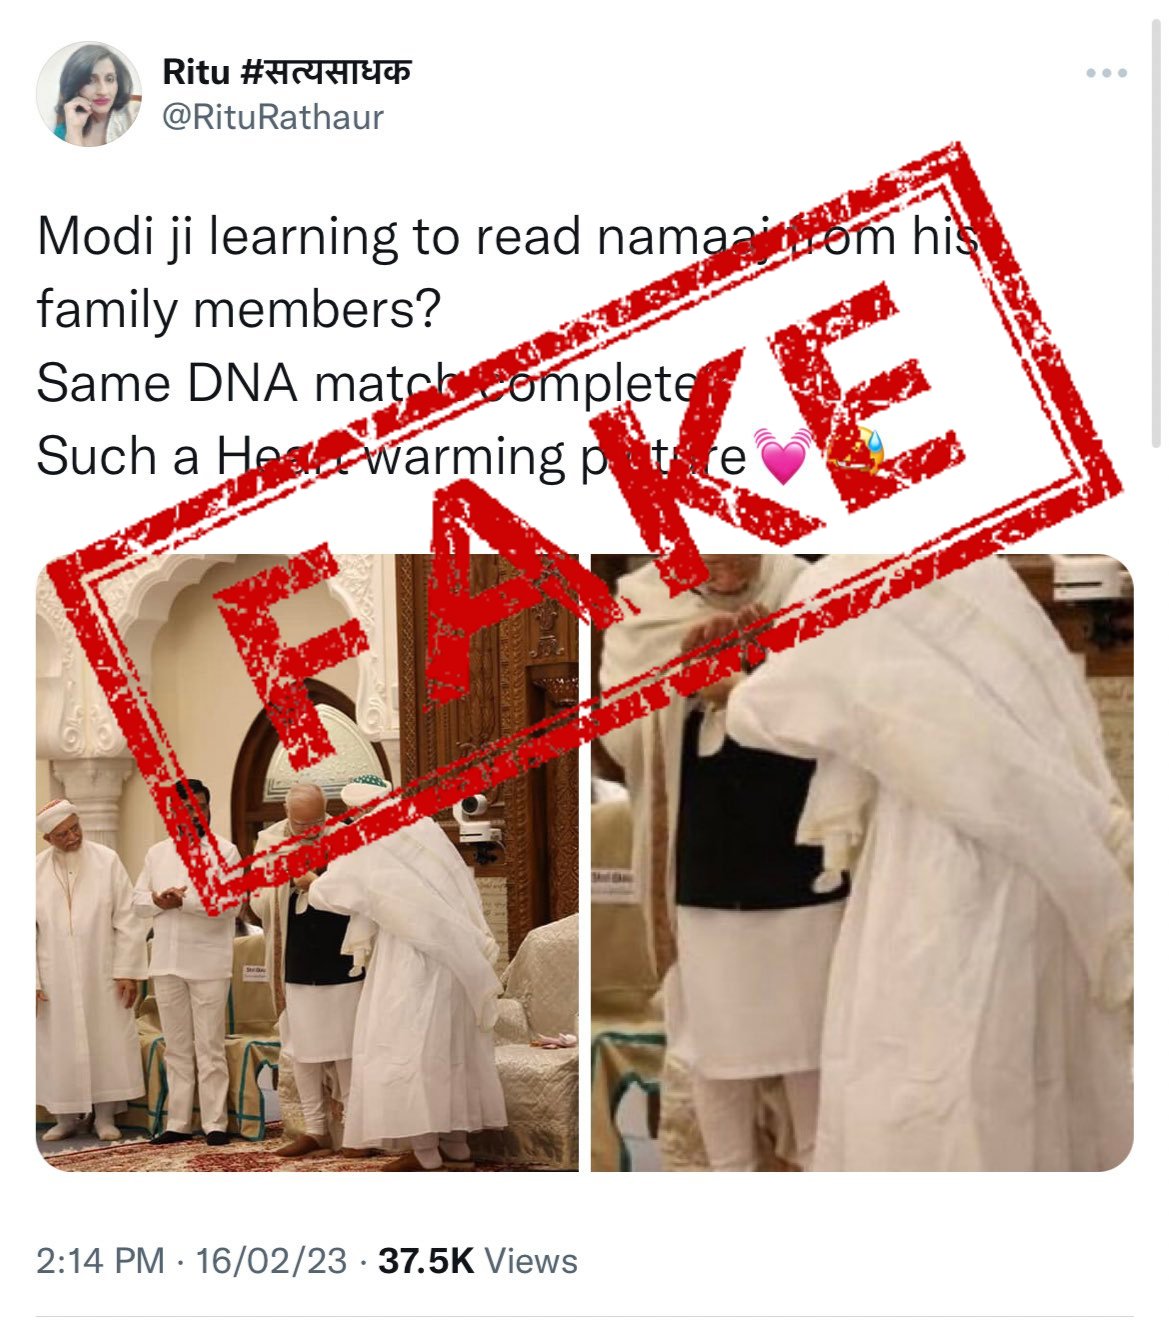 Tweeples bust fake news of PM Modi learning Namaz at Dawoodi Bohra community event